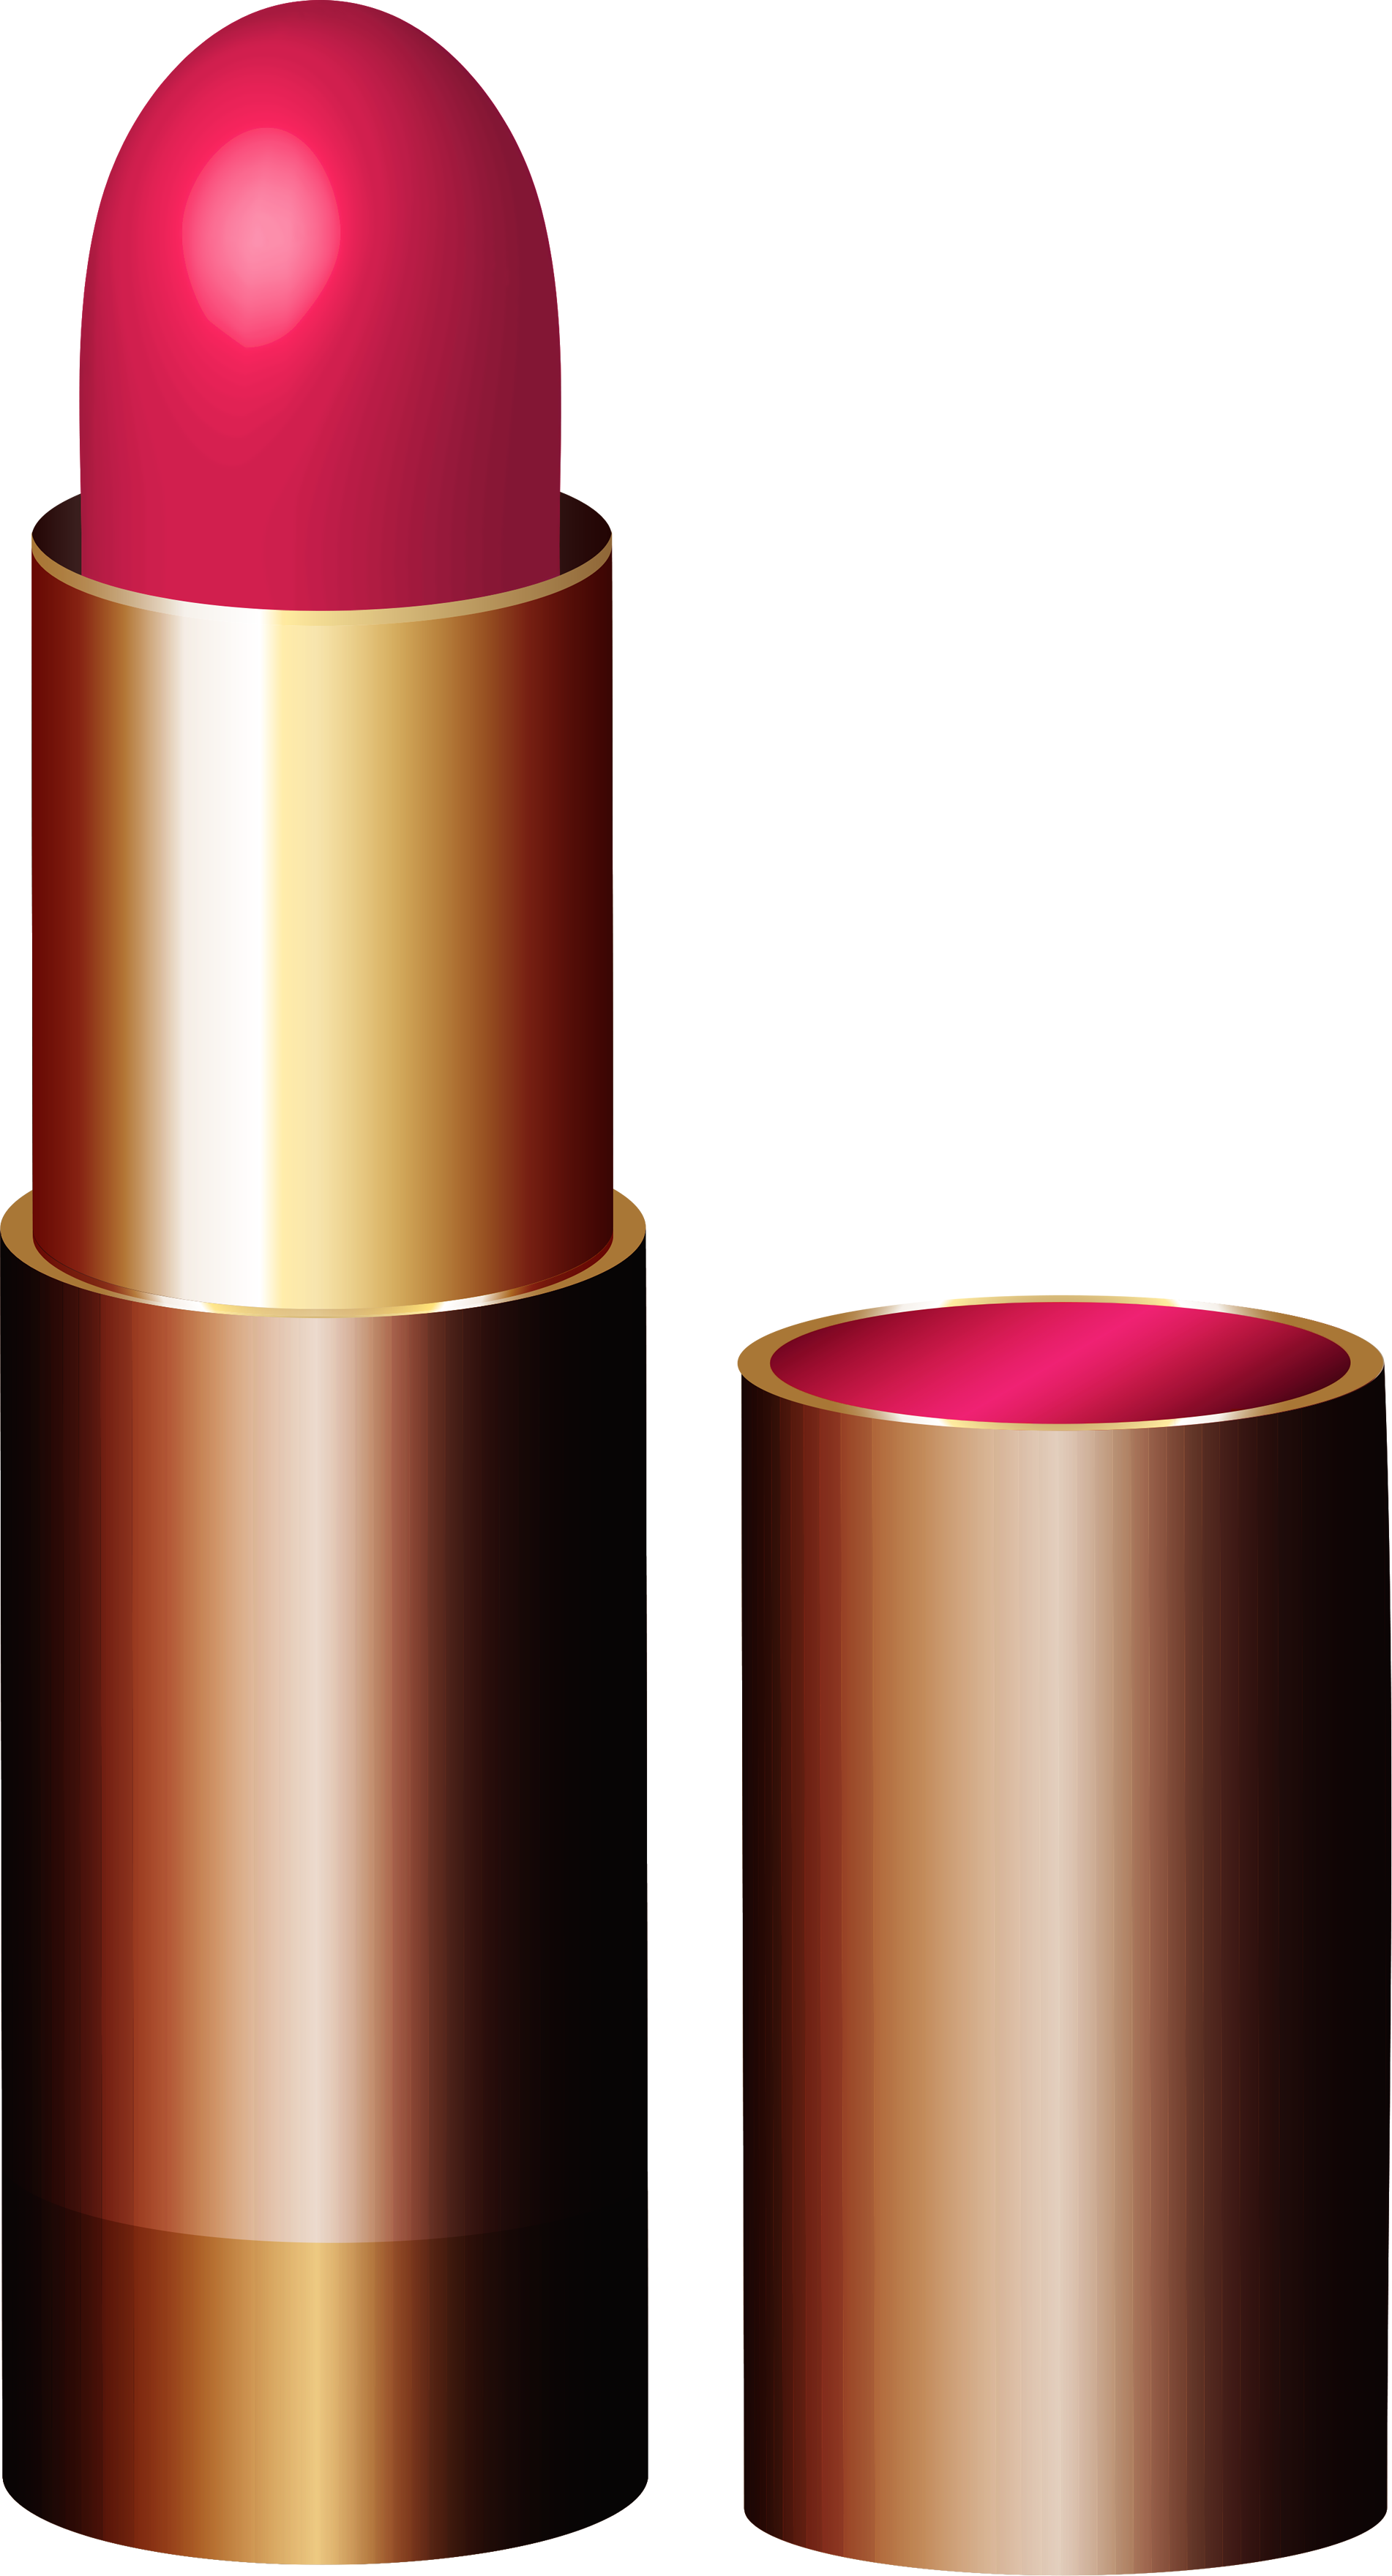 Makeup Lipsticks PNG HD Quality